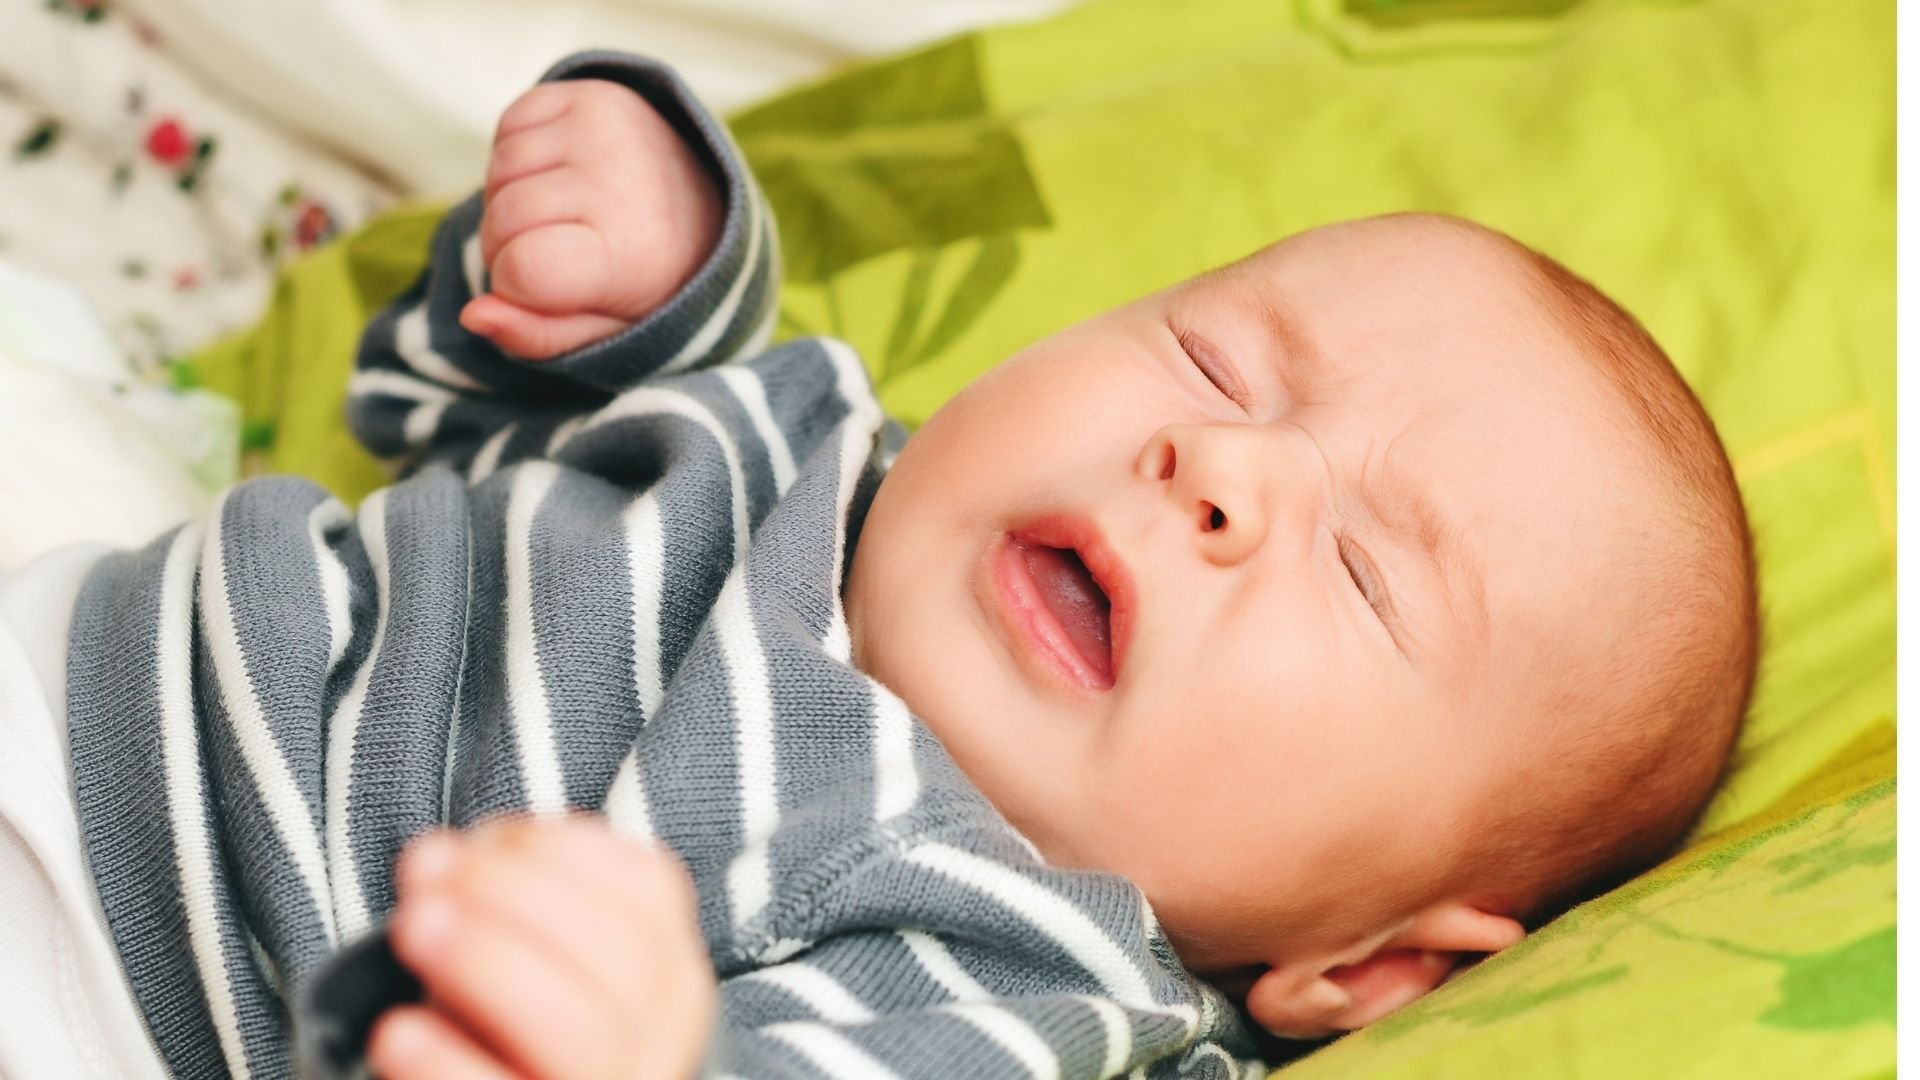 Preventing Baby Choking During Feedings